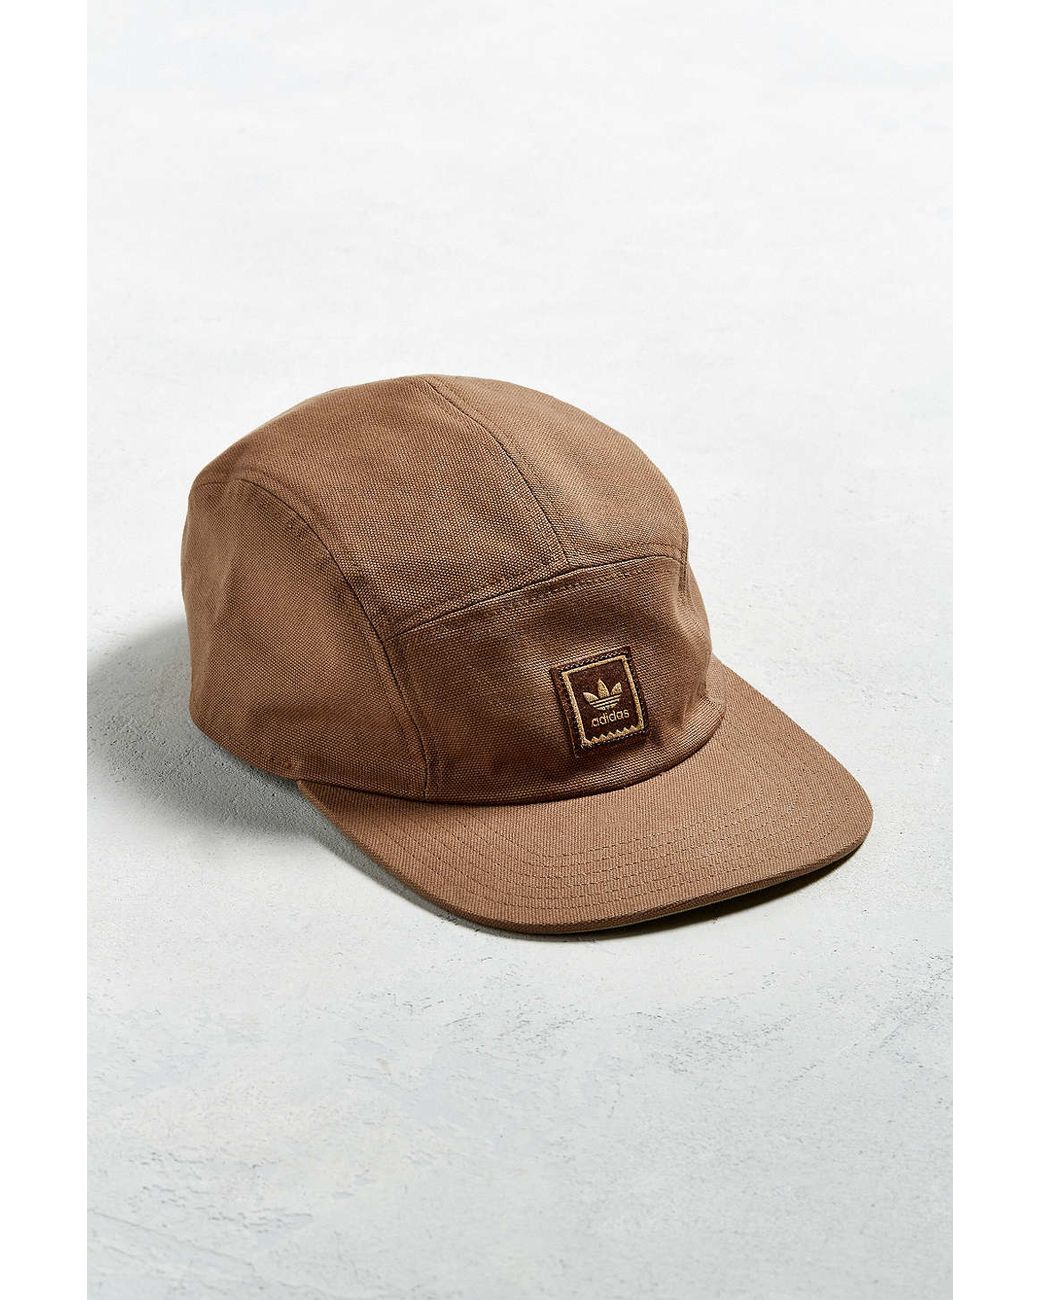 adidas in Hat | 5-panel for Brown Lyst Sk8 Men Originals